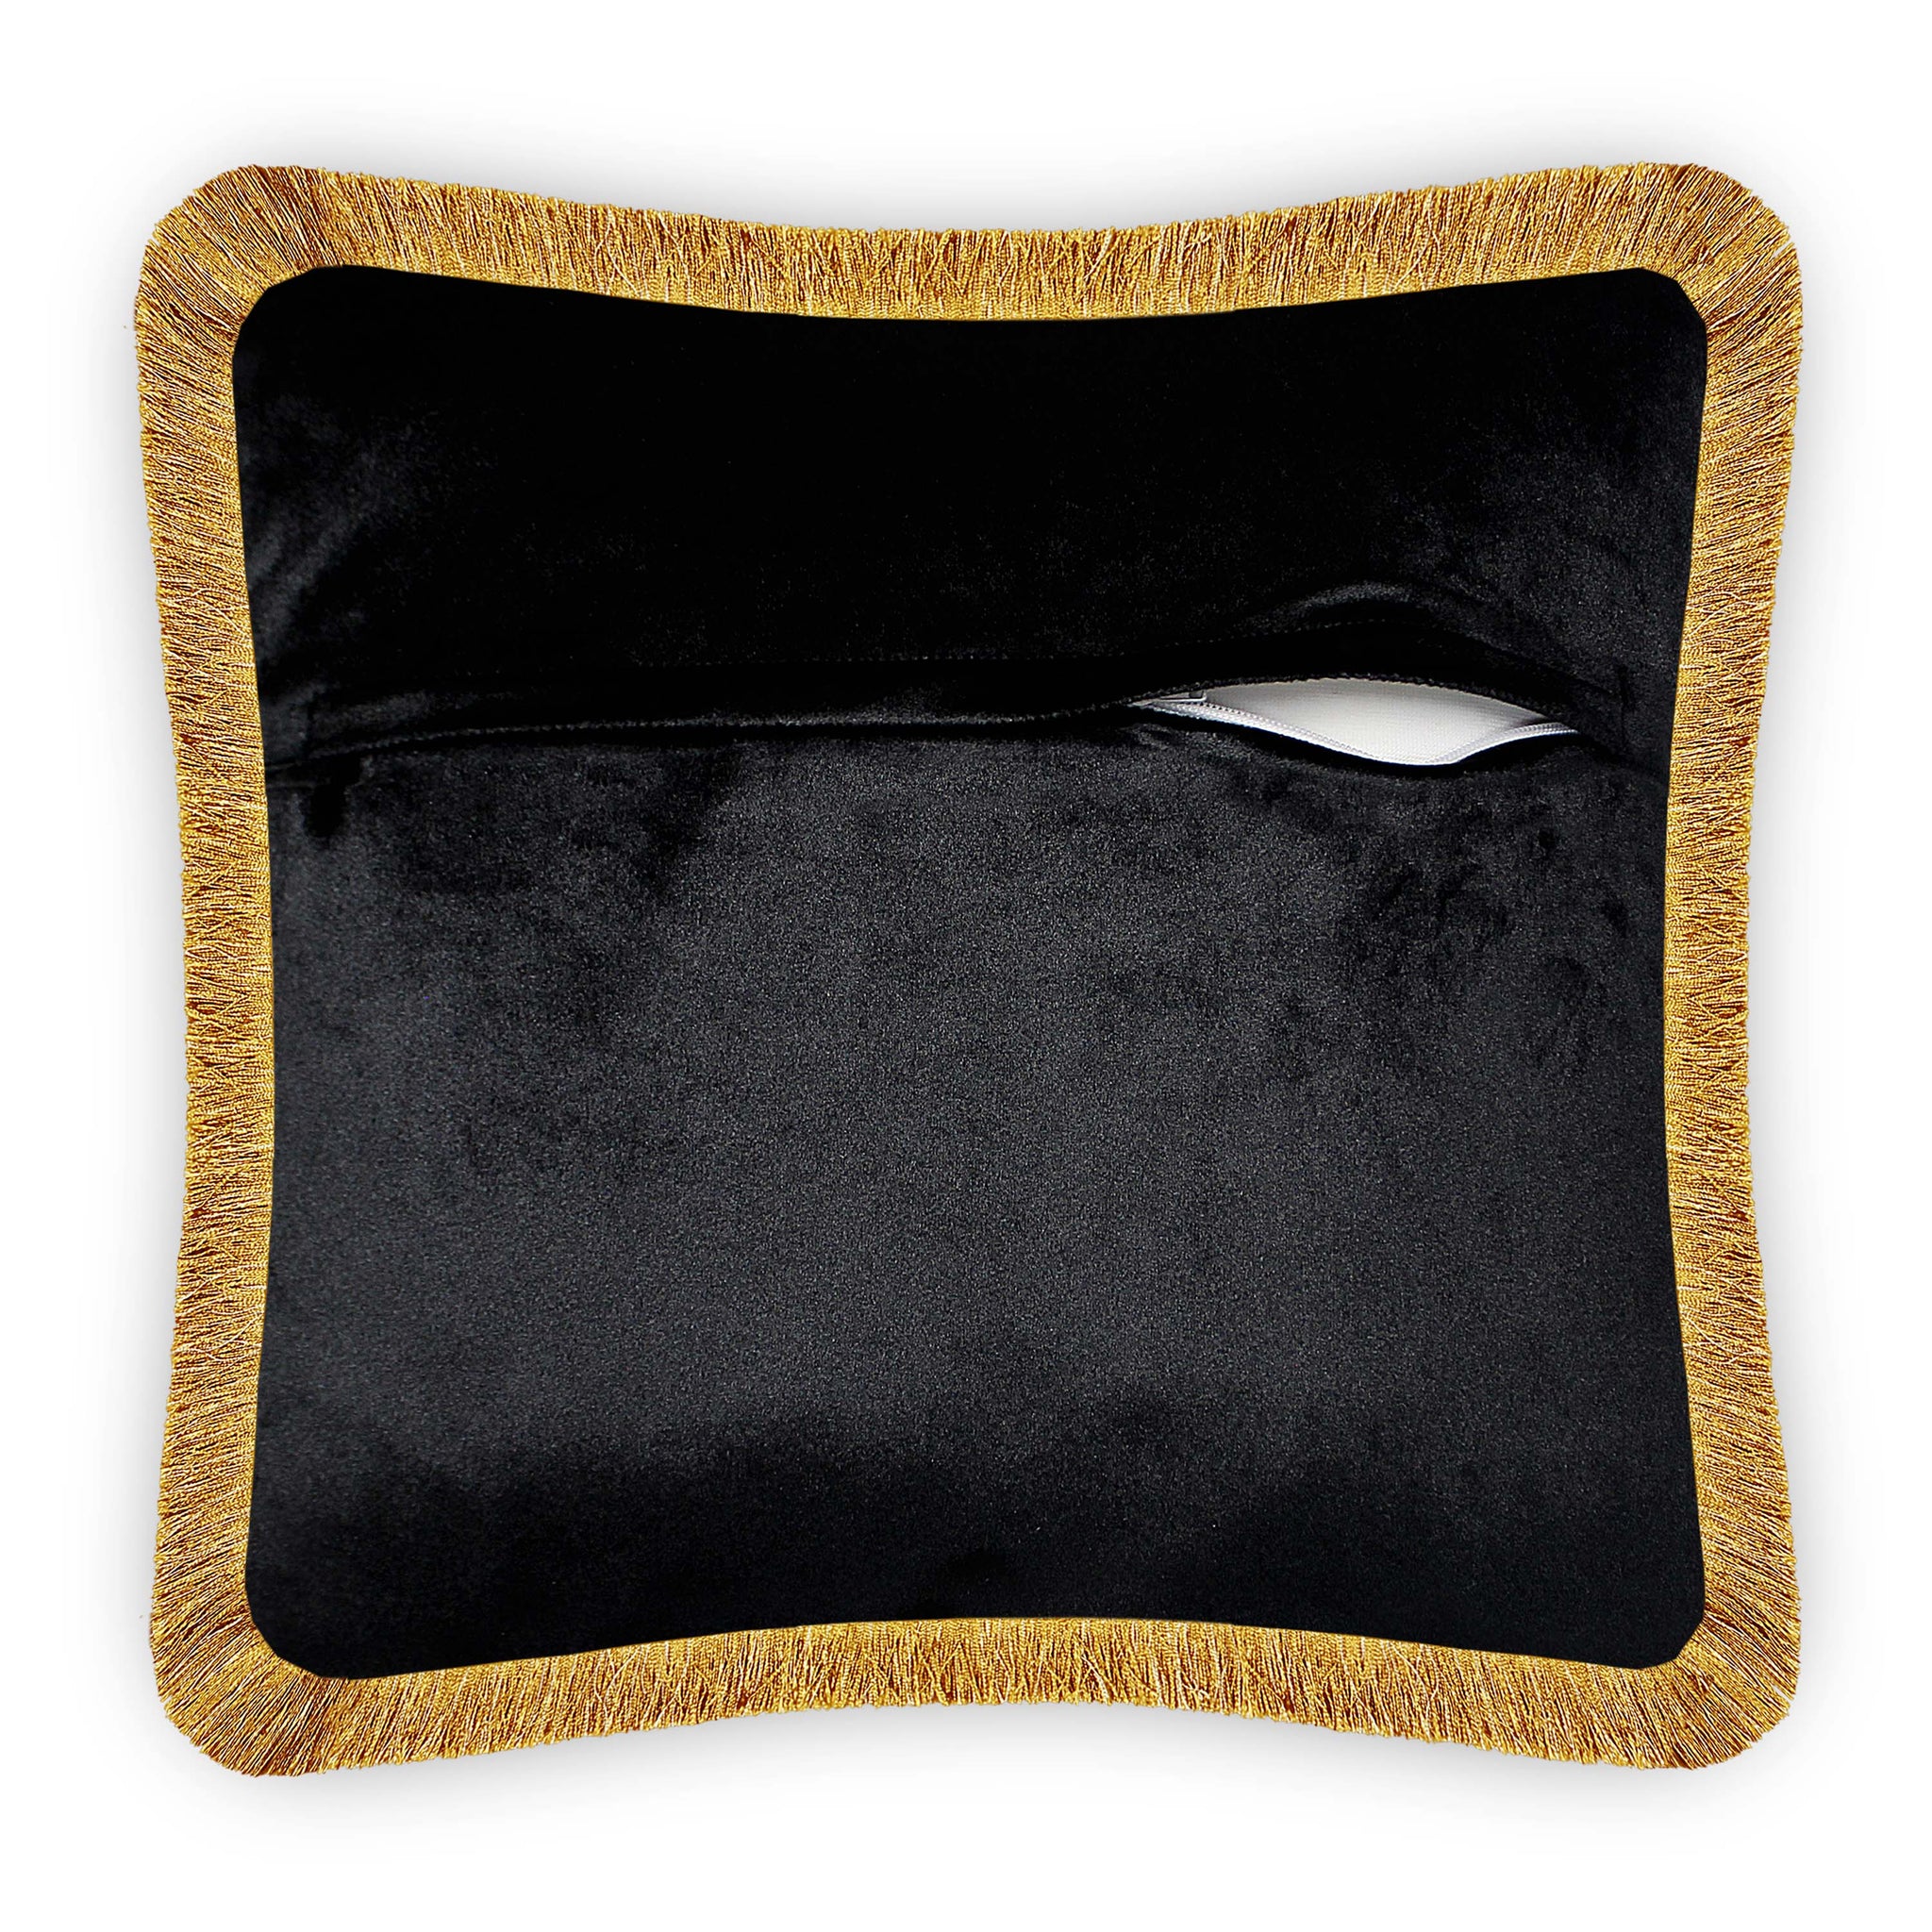 Black Velvet Cushion Cover Ethnic Thailand Geometric Decorative Pillowcase Modern Home Décor Throw Pillow for Sofa Chair Couch Bedroom 45x45 cm 18x18 In